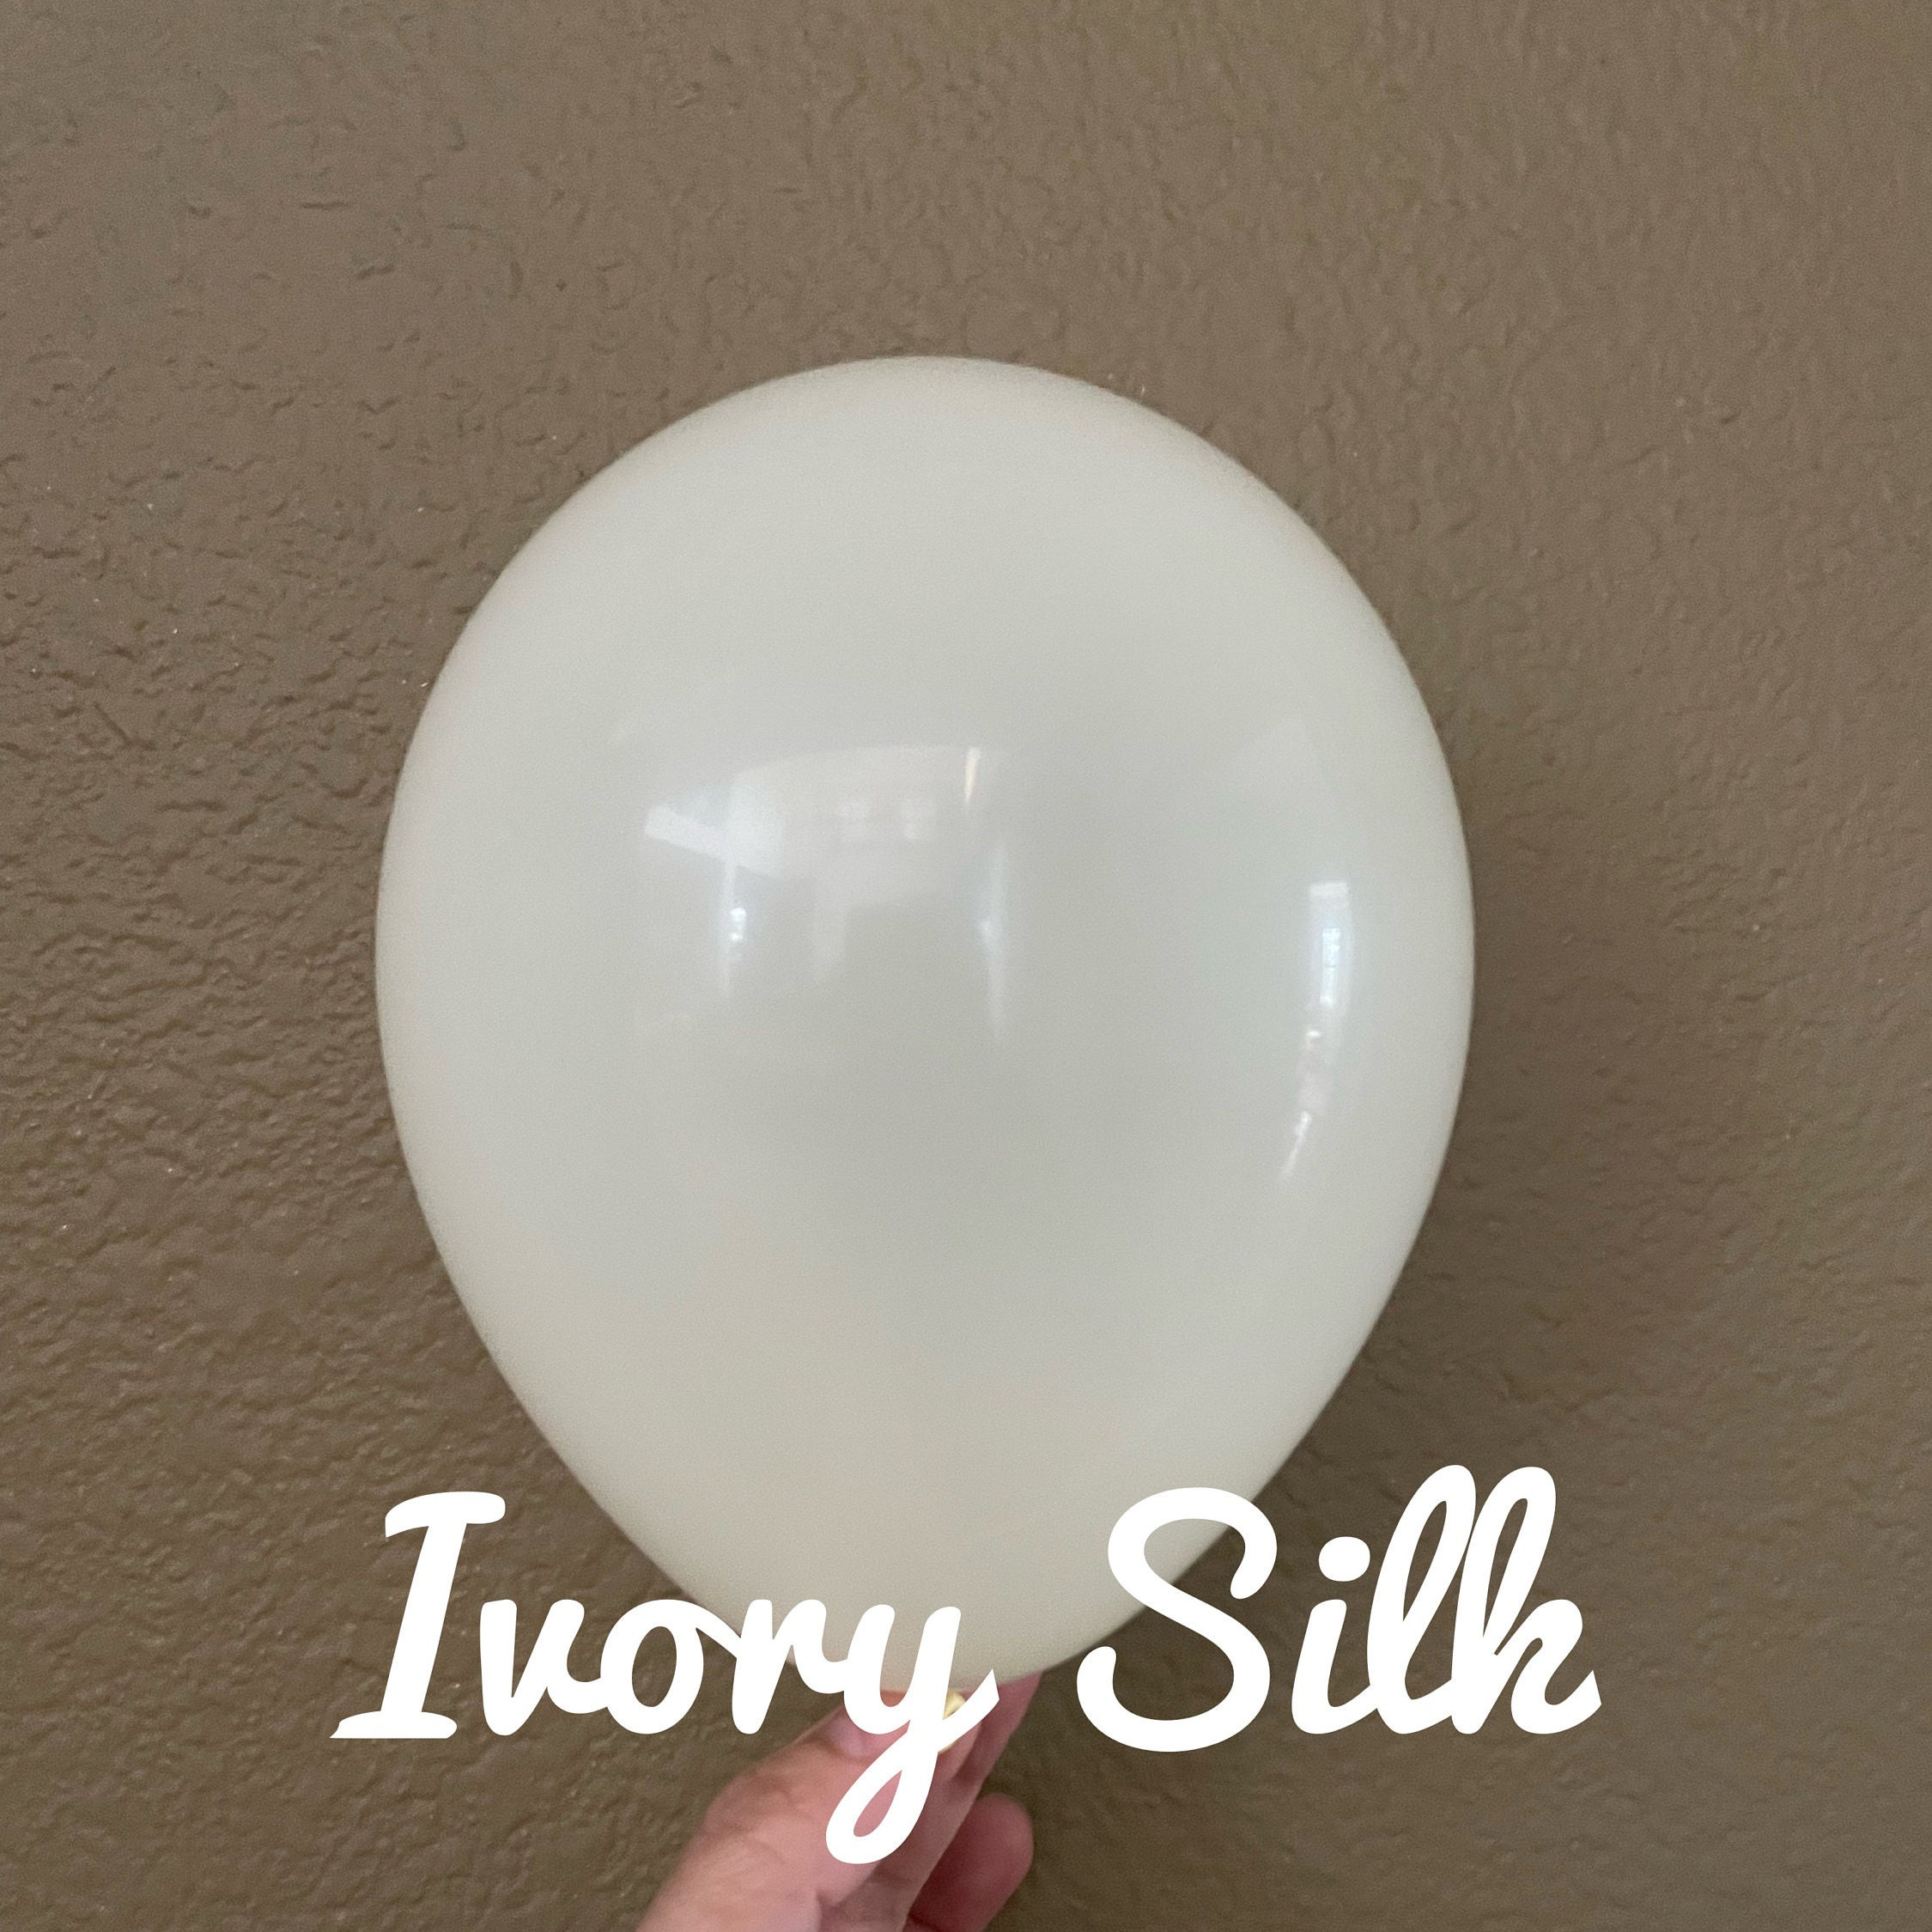 16FT Balloon Decoration Strip, Plastic Strips, Balloon Tape, DIY